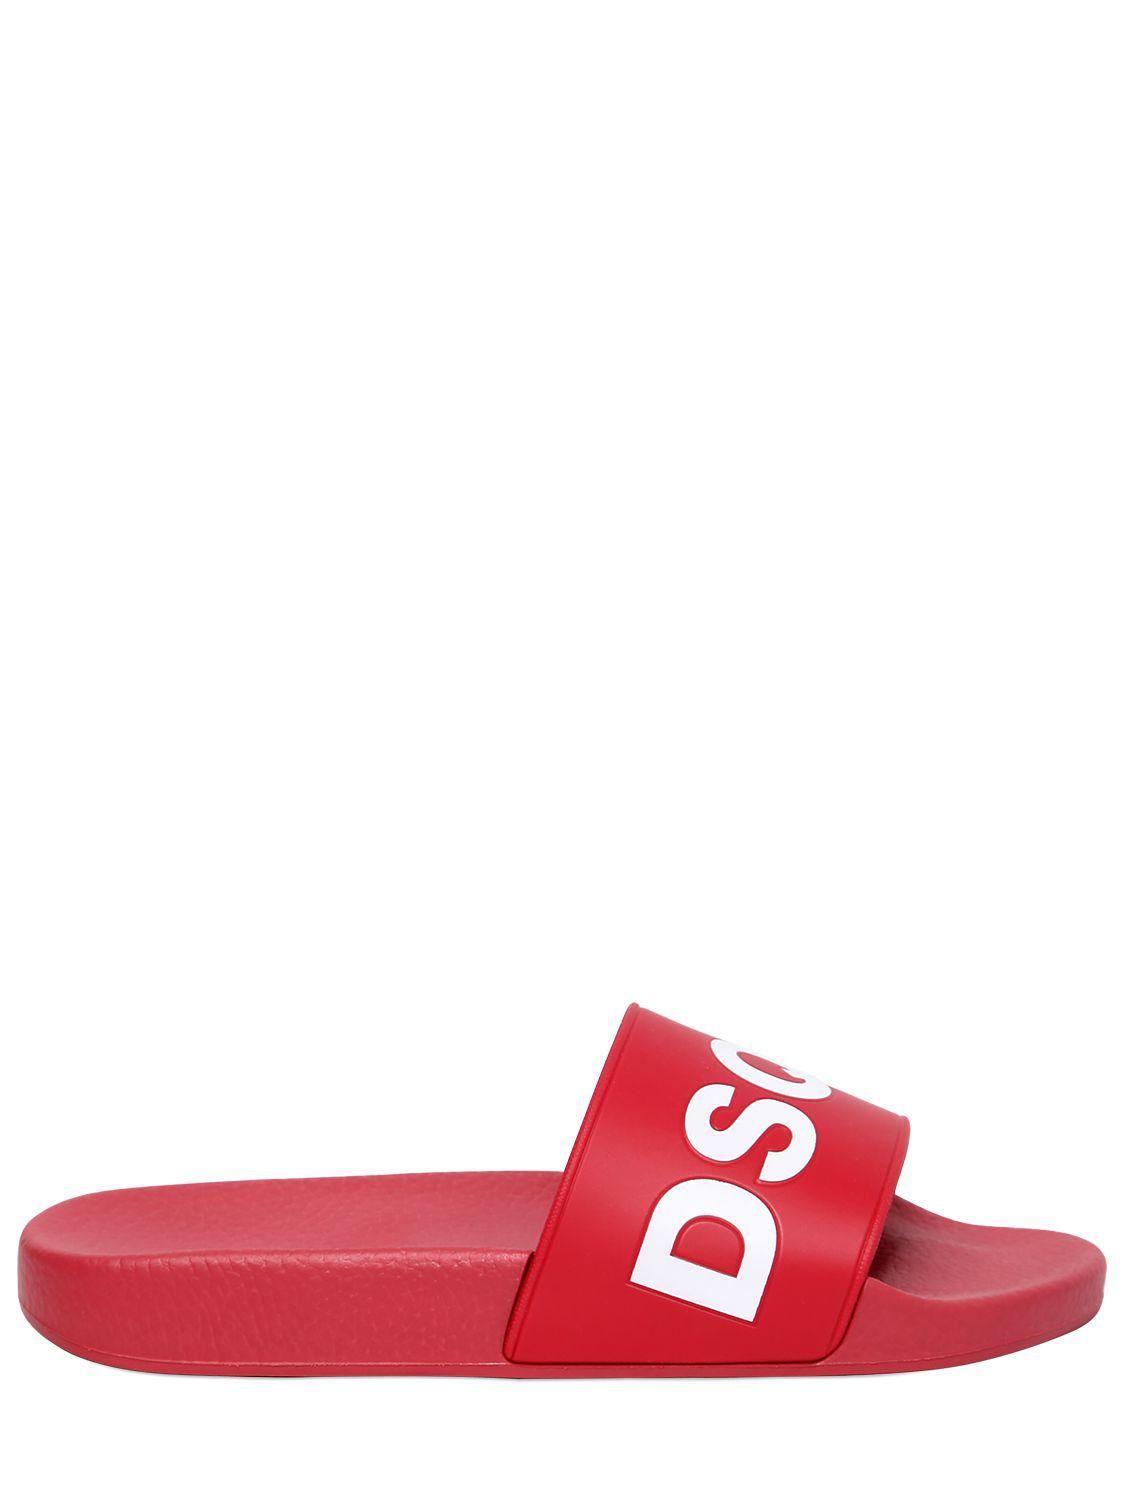 Dune Logo - DSquared² Dune Logo Rubber Slide Sandals in Red - Save ...